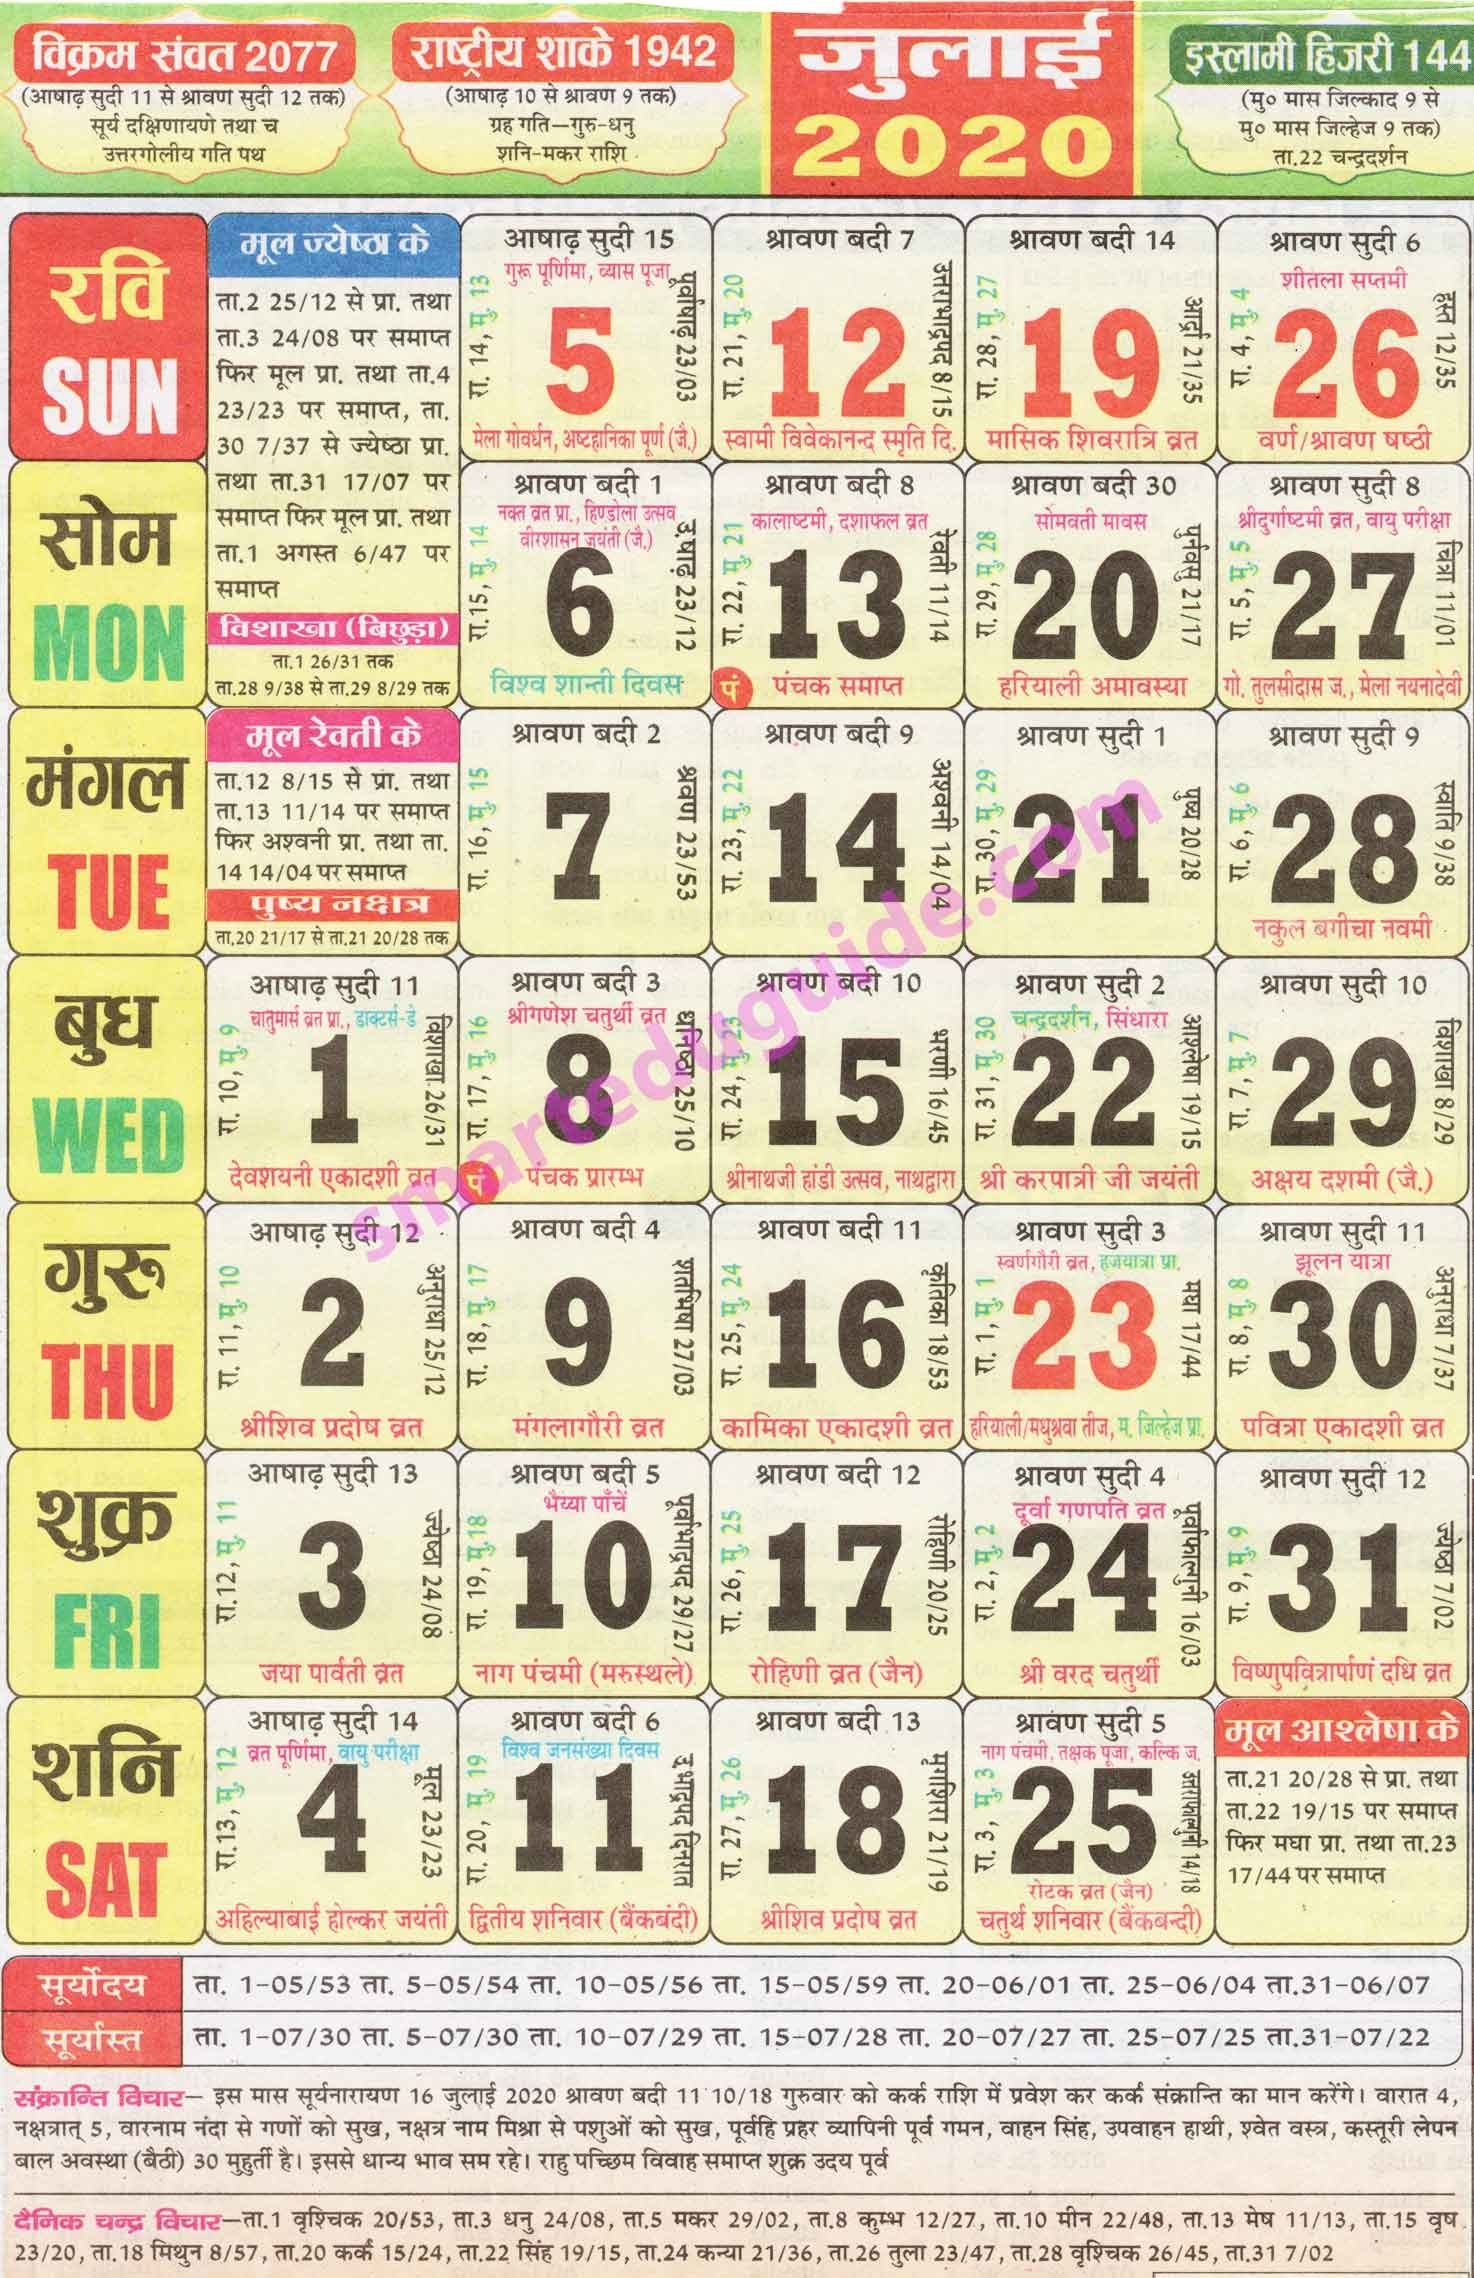 Hindi Calendar 2020 33 Apk - Thakur Prasad Calendar 2020 2020 Calendar In Hindi